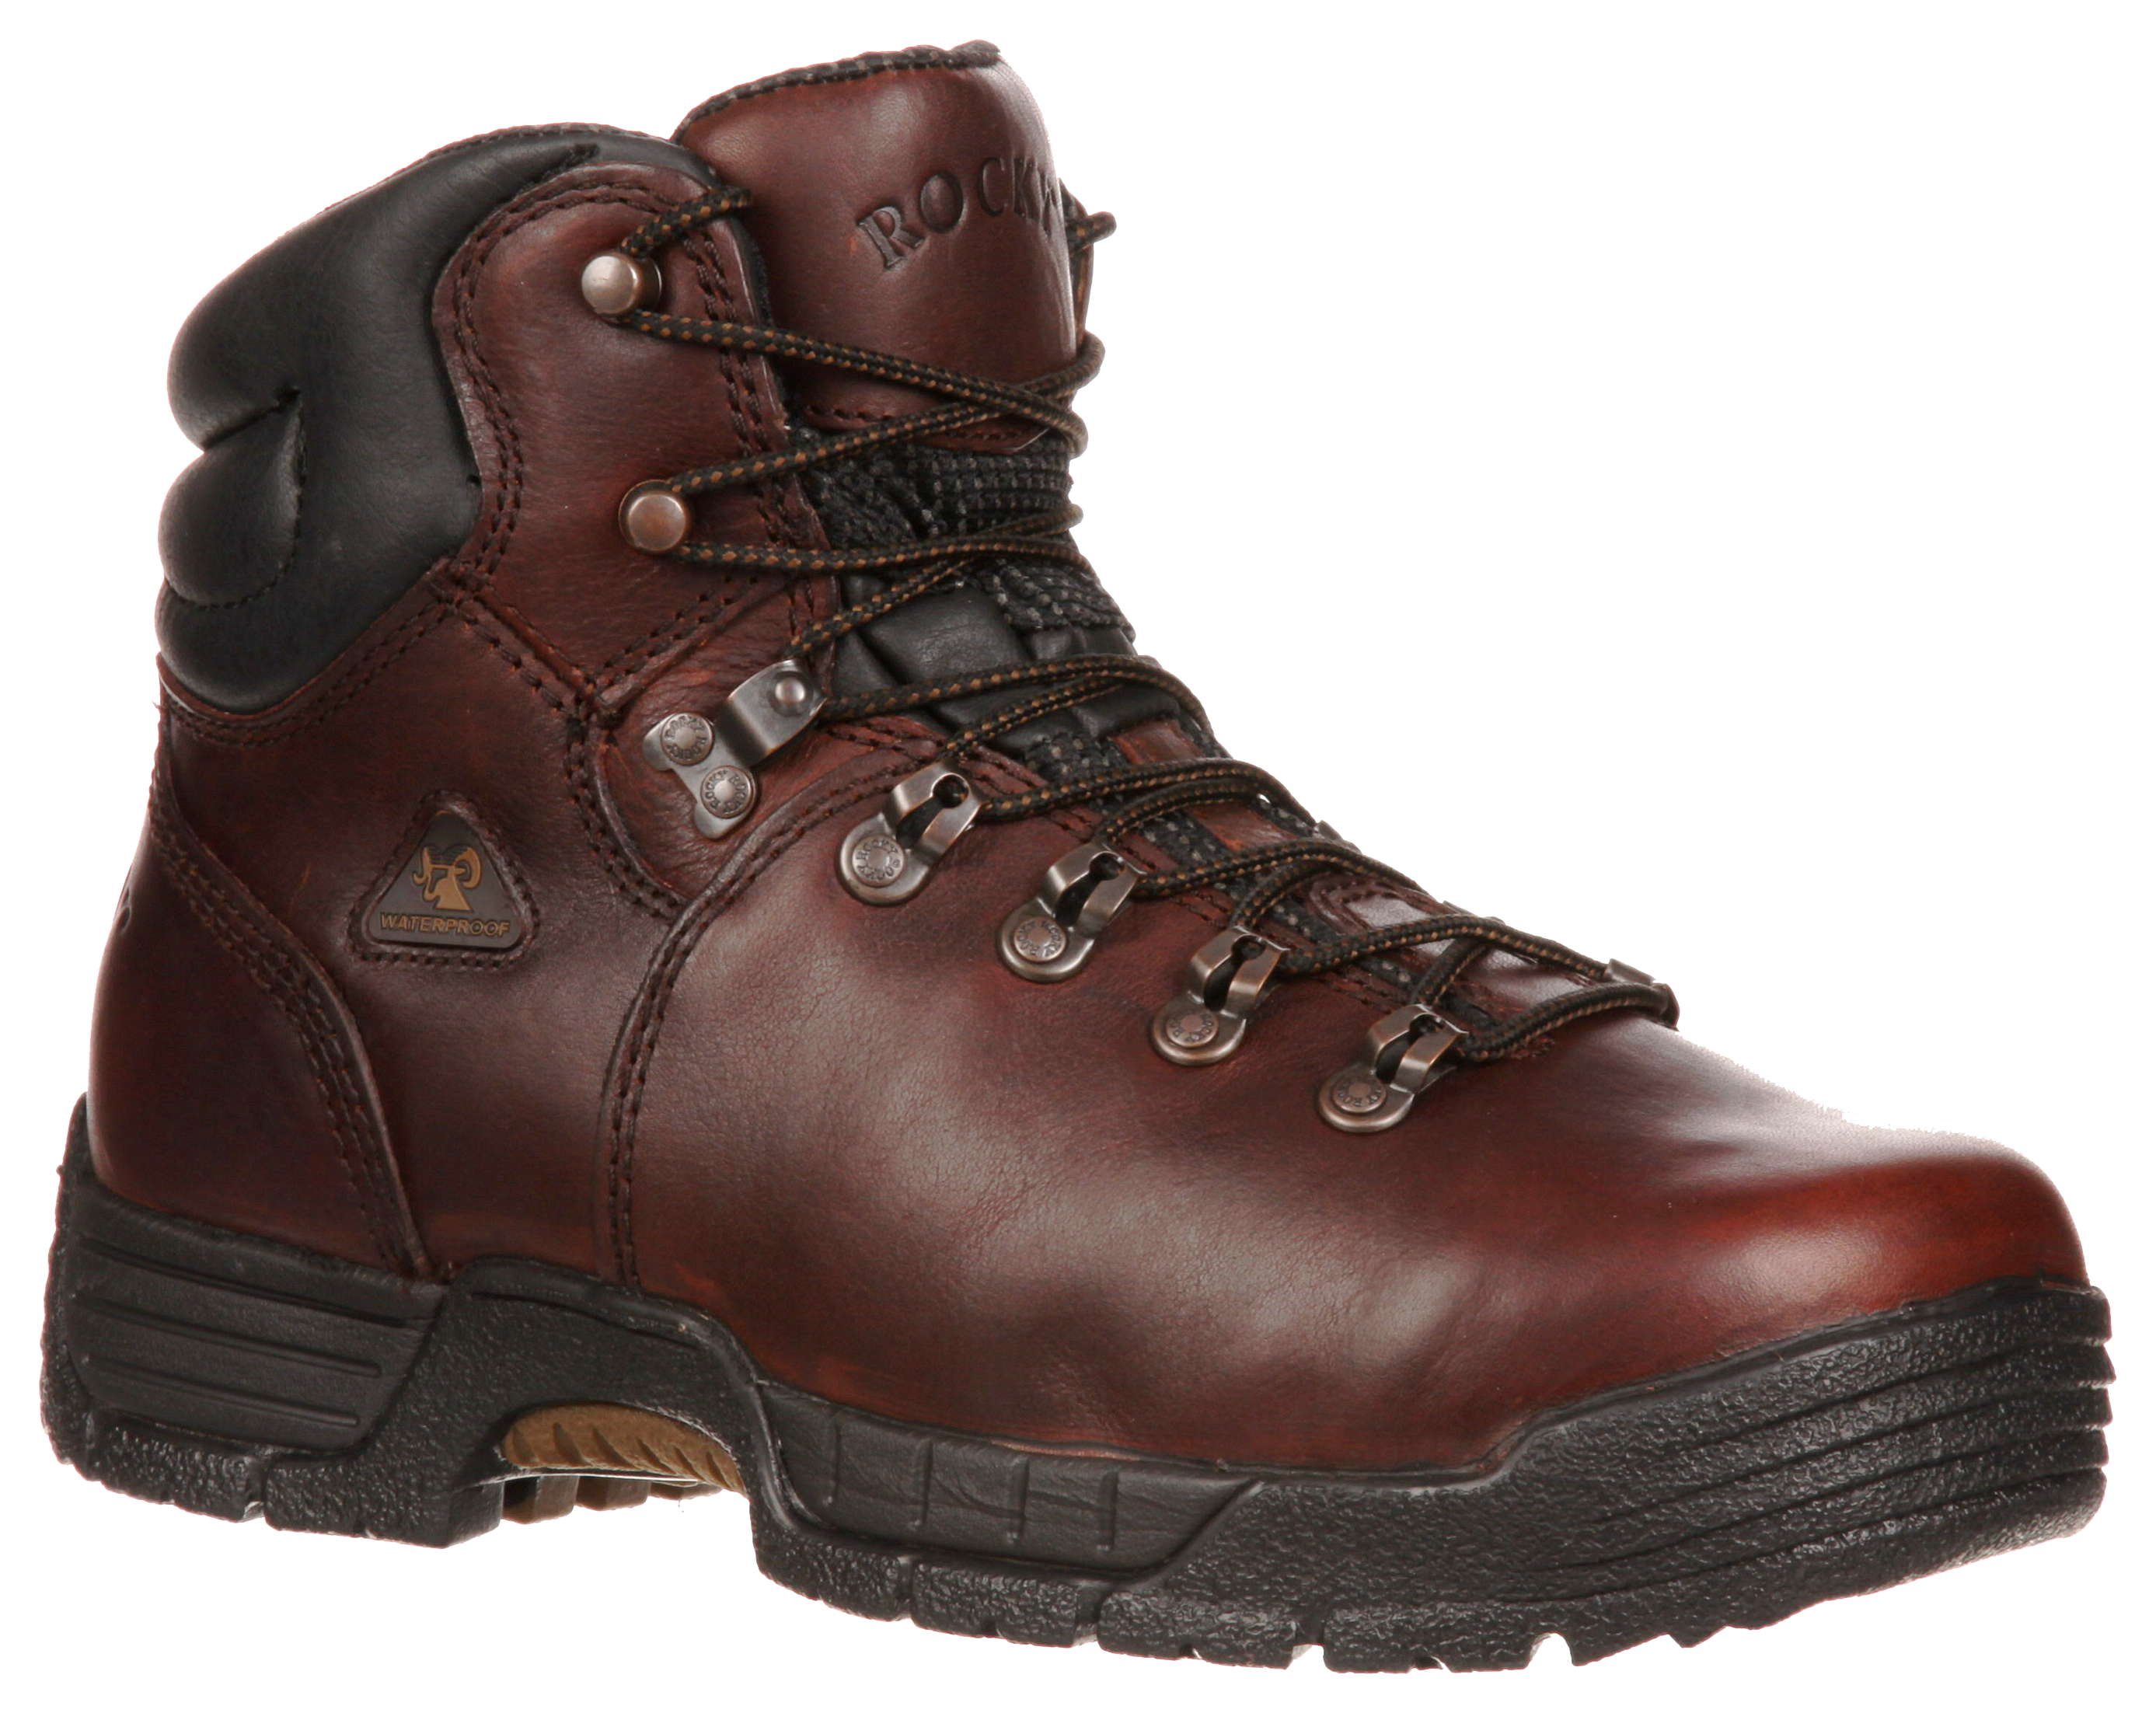 ROCKY MobiLite Waterproof Steel Toe Work Boots for Men - Brown - 9 M